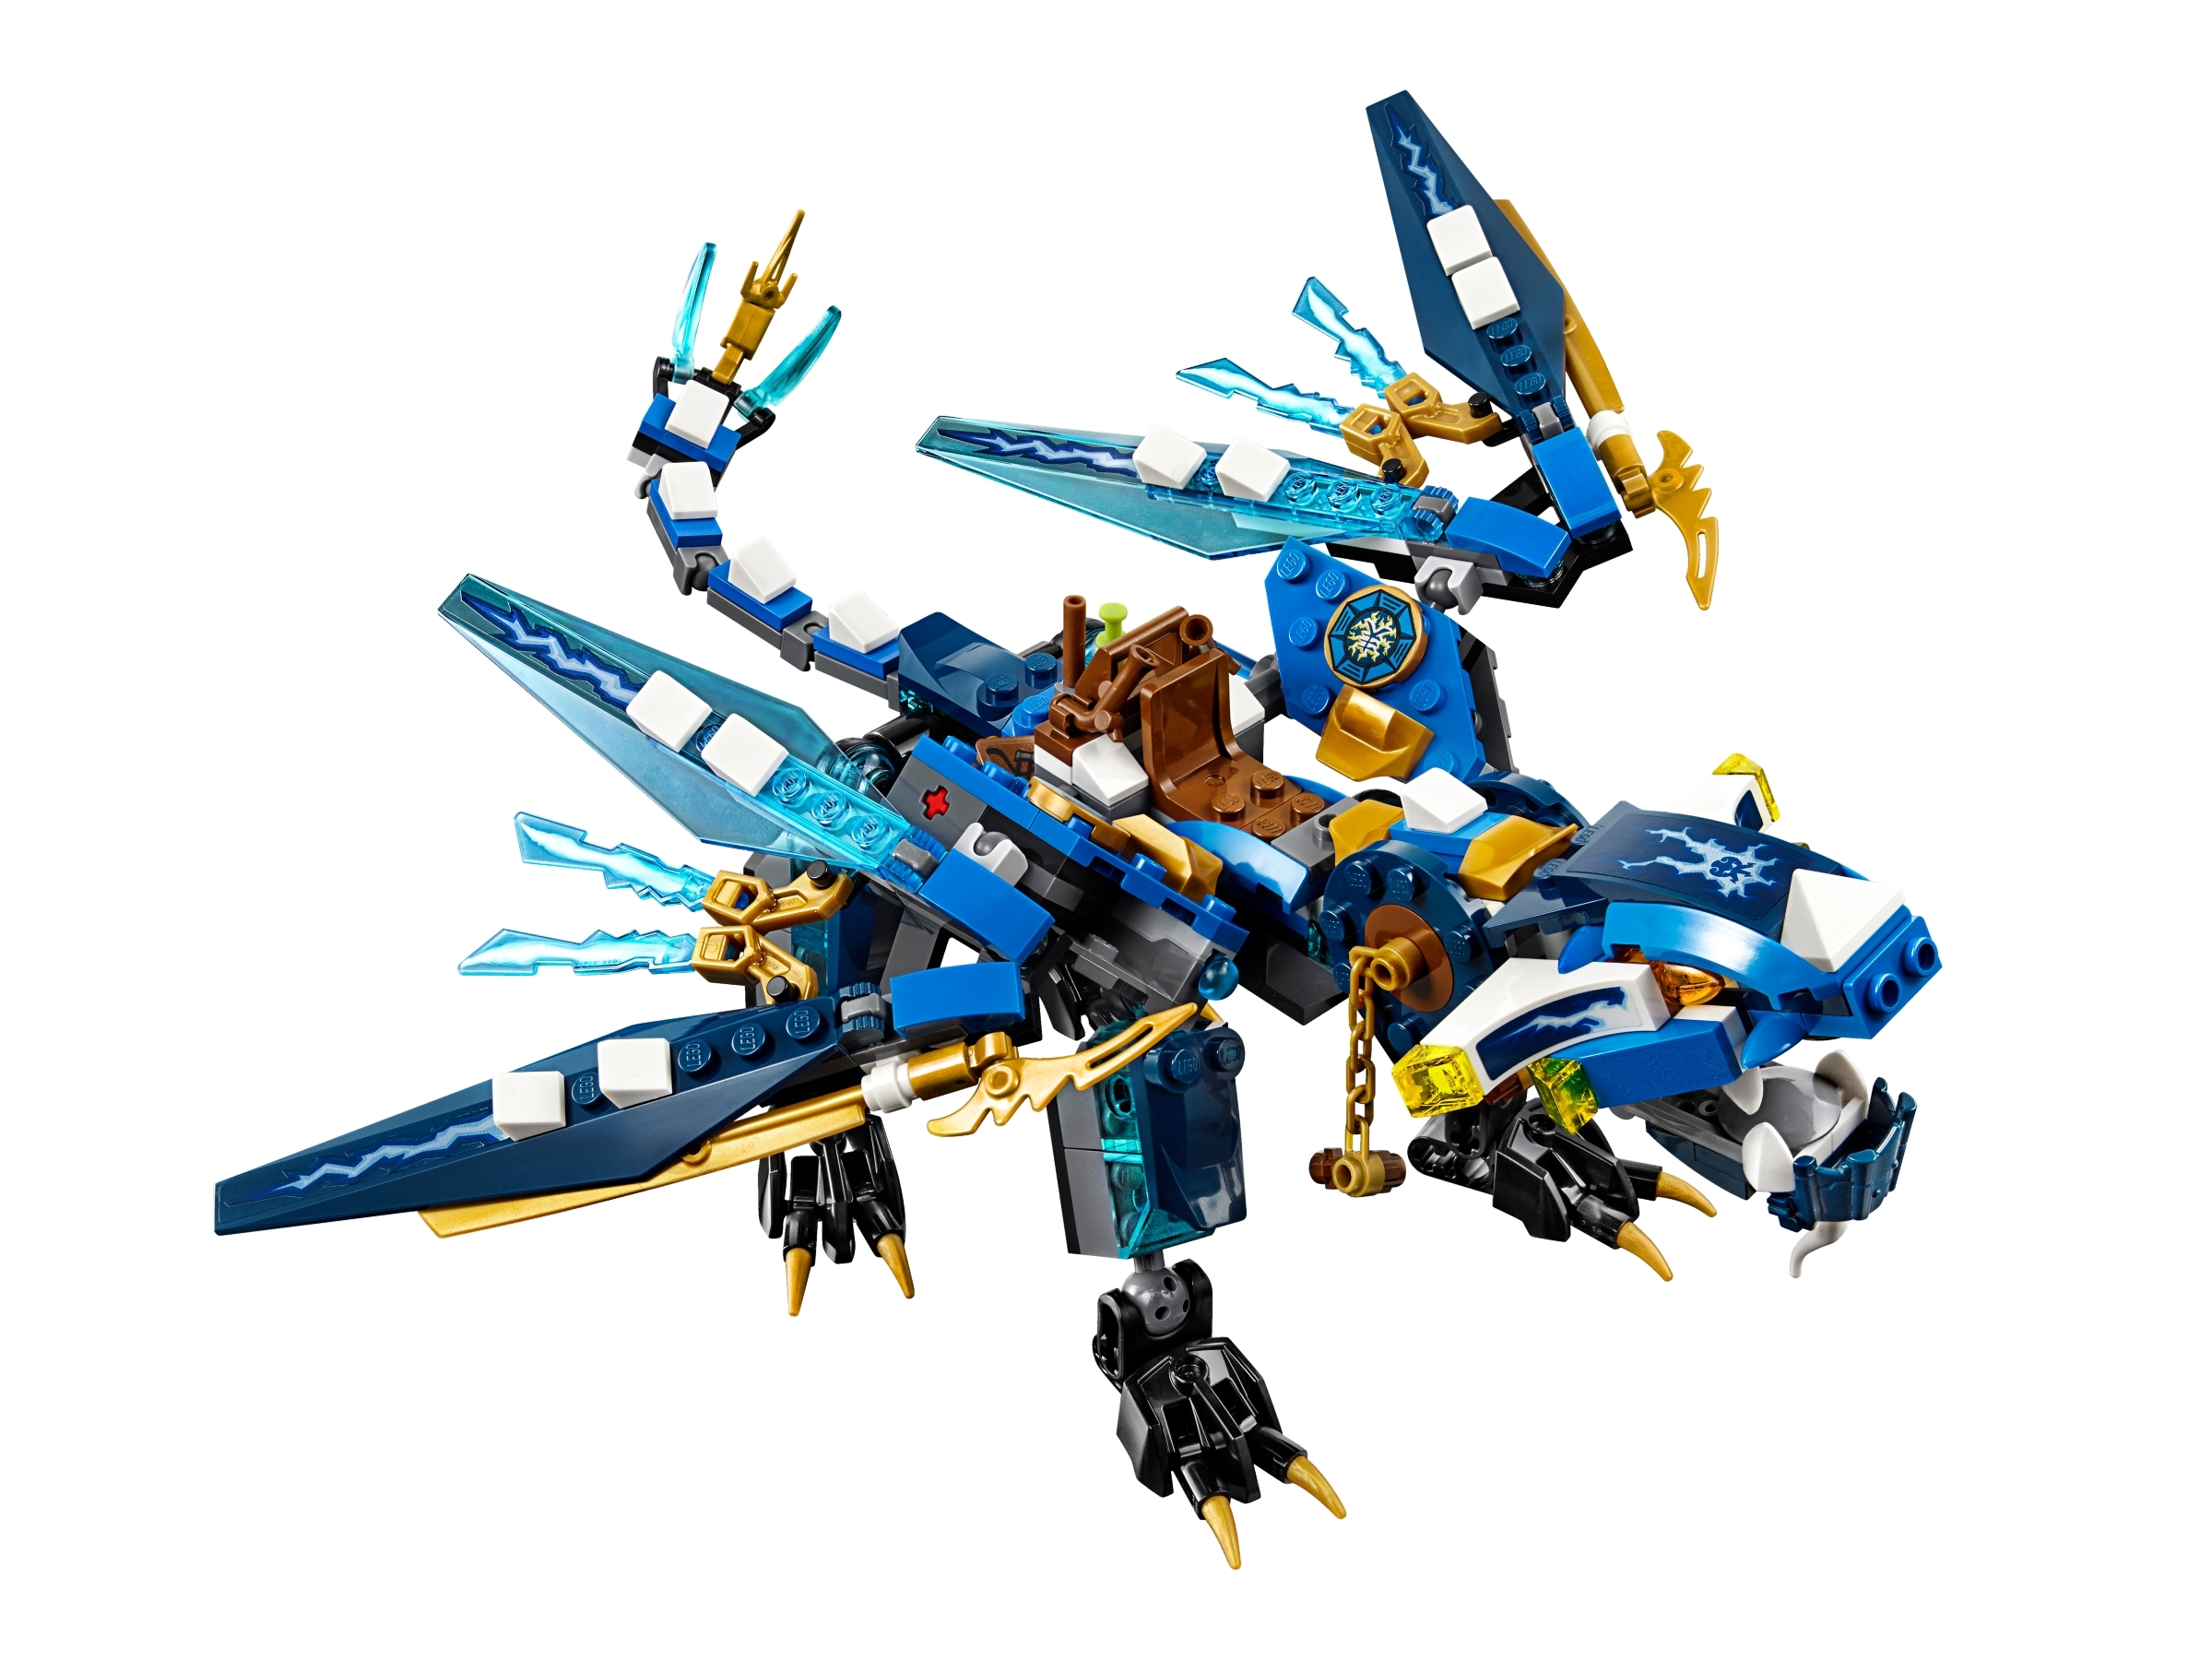 Jays elementdrage NINJAGO® | LEGO® Shop DK